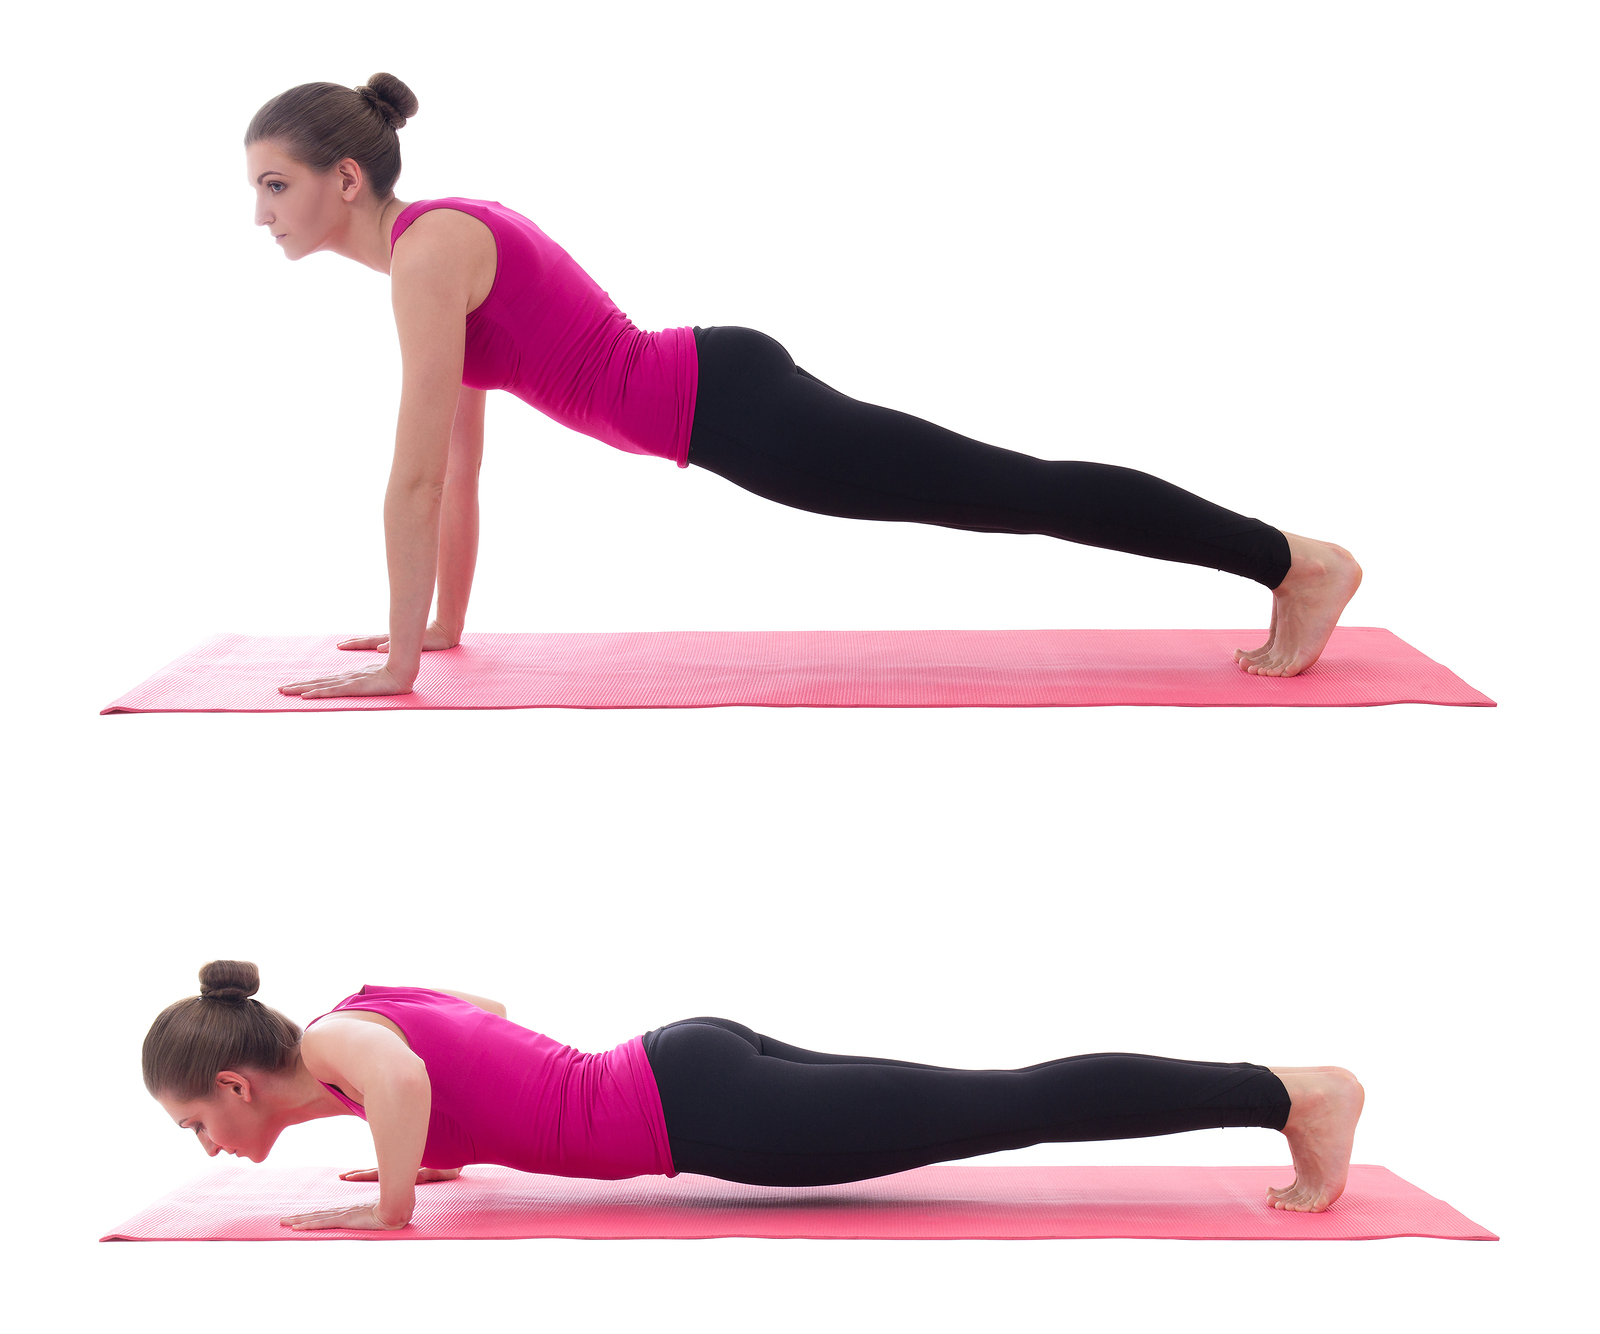 sport concept push up instruction - beautiful woman doing push up exercise on yoga mat isolated on white background